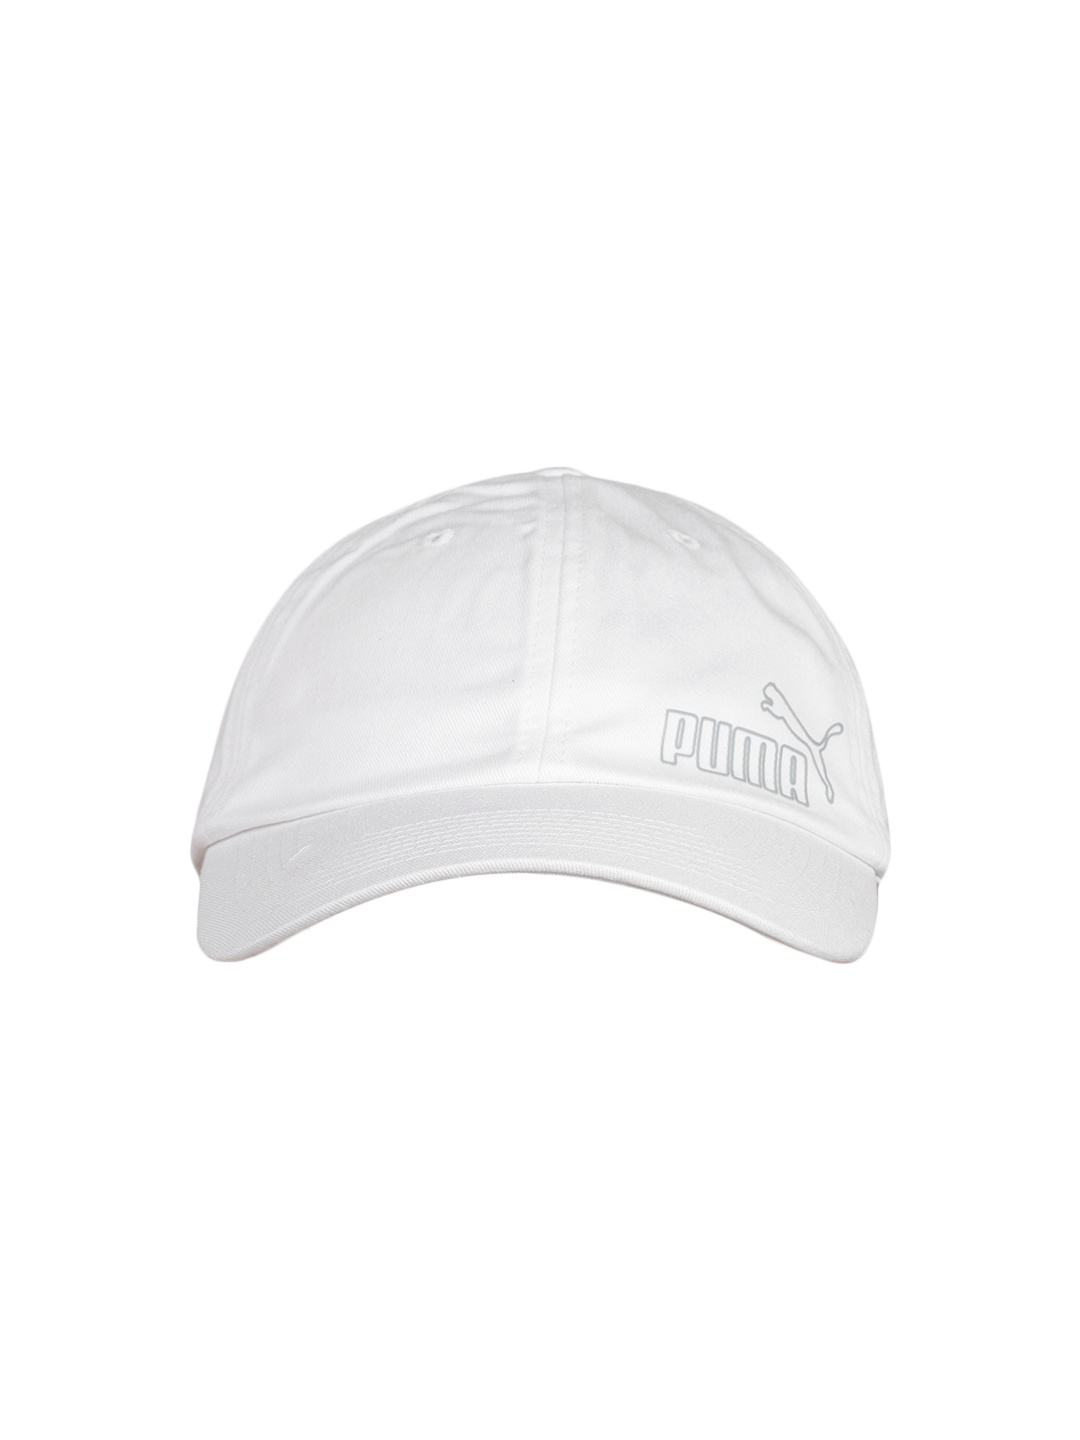 

Puma Unisex White Solid Baseball Cap